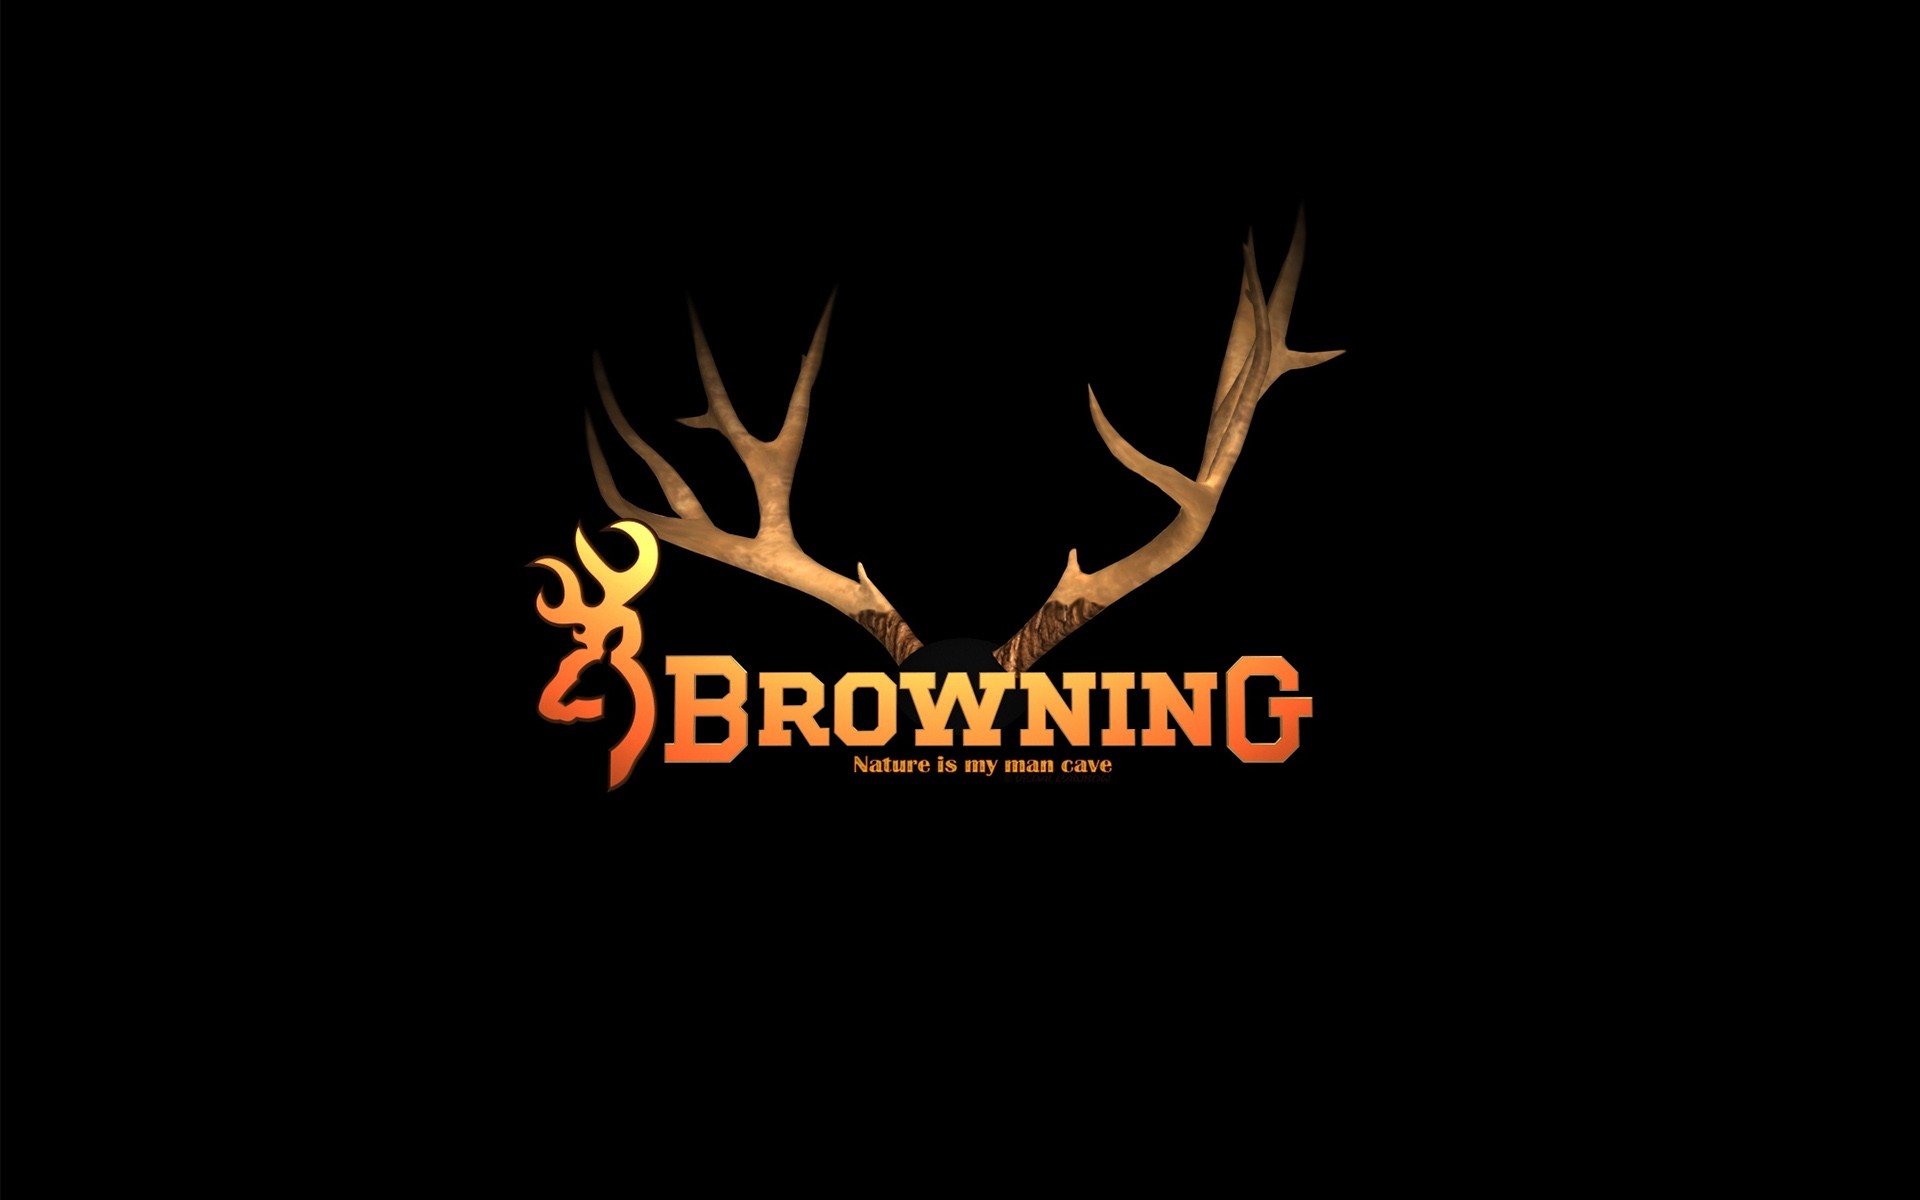 1920x1200 Browning Logo Desktop Wallpaper Images & Pictures - Becuo